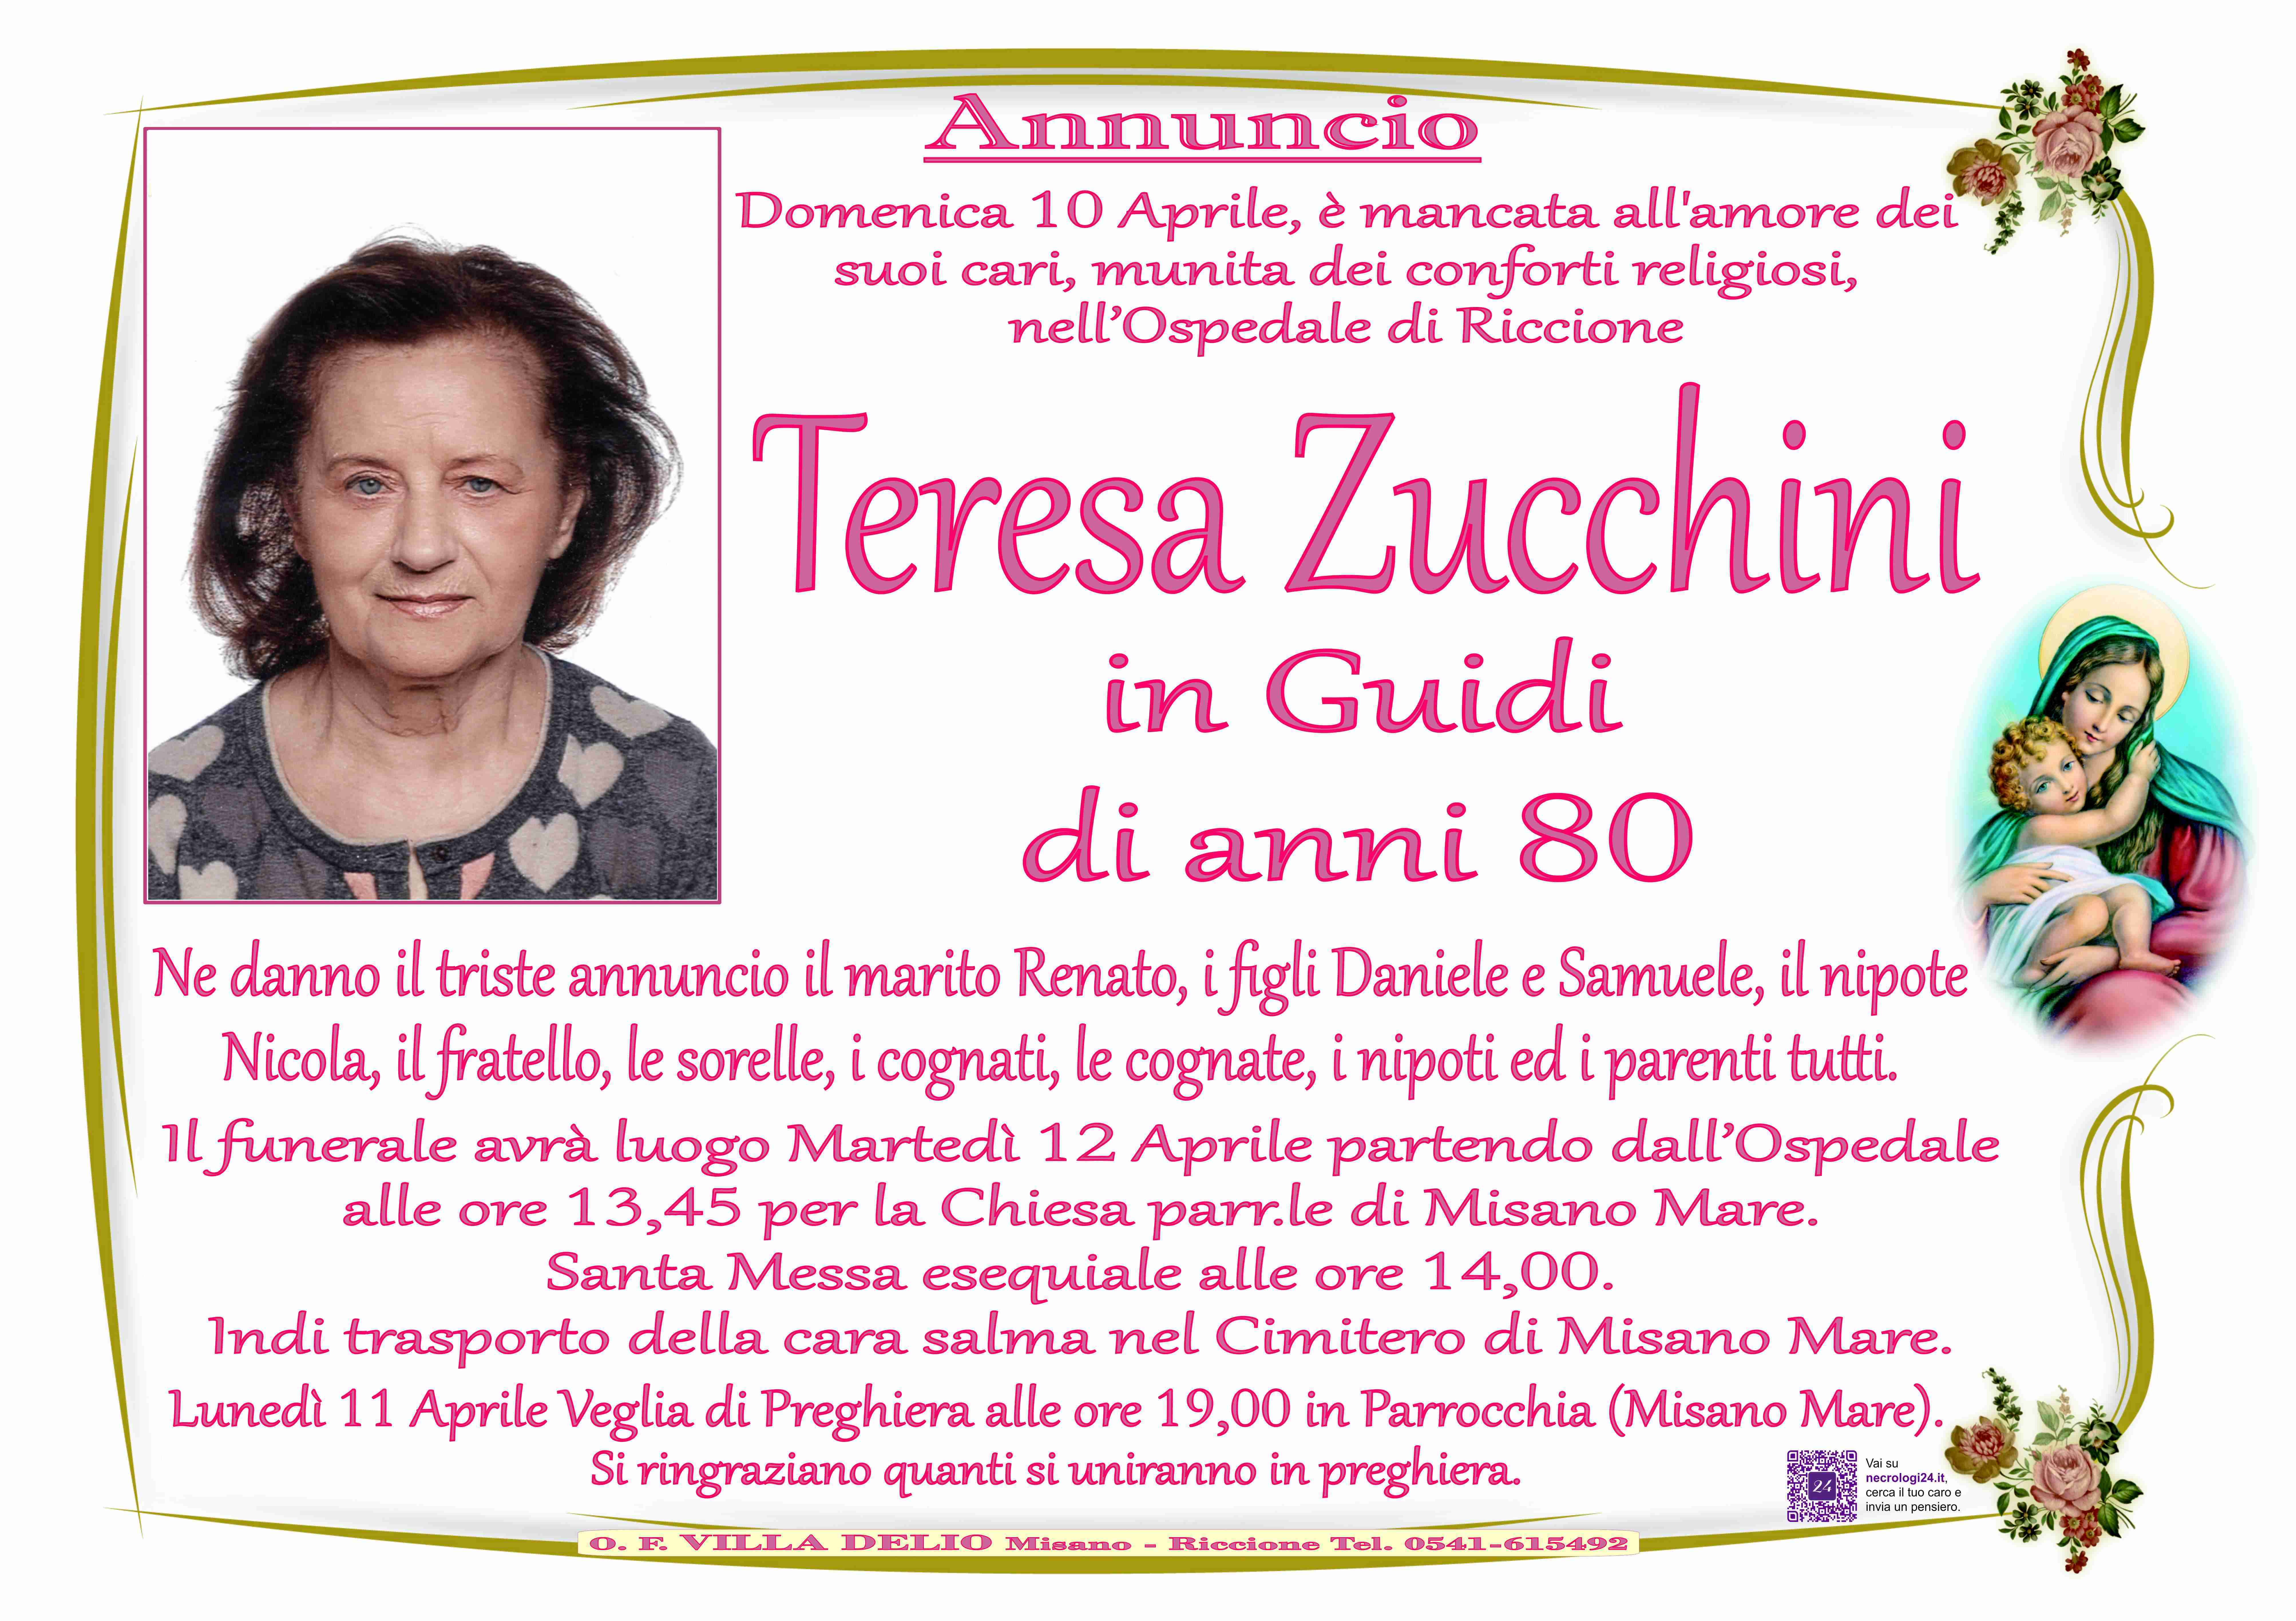 Teresa Zucchini